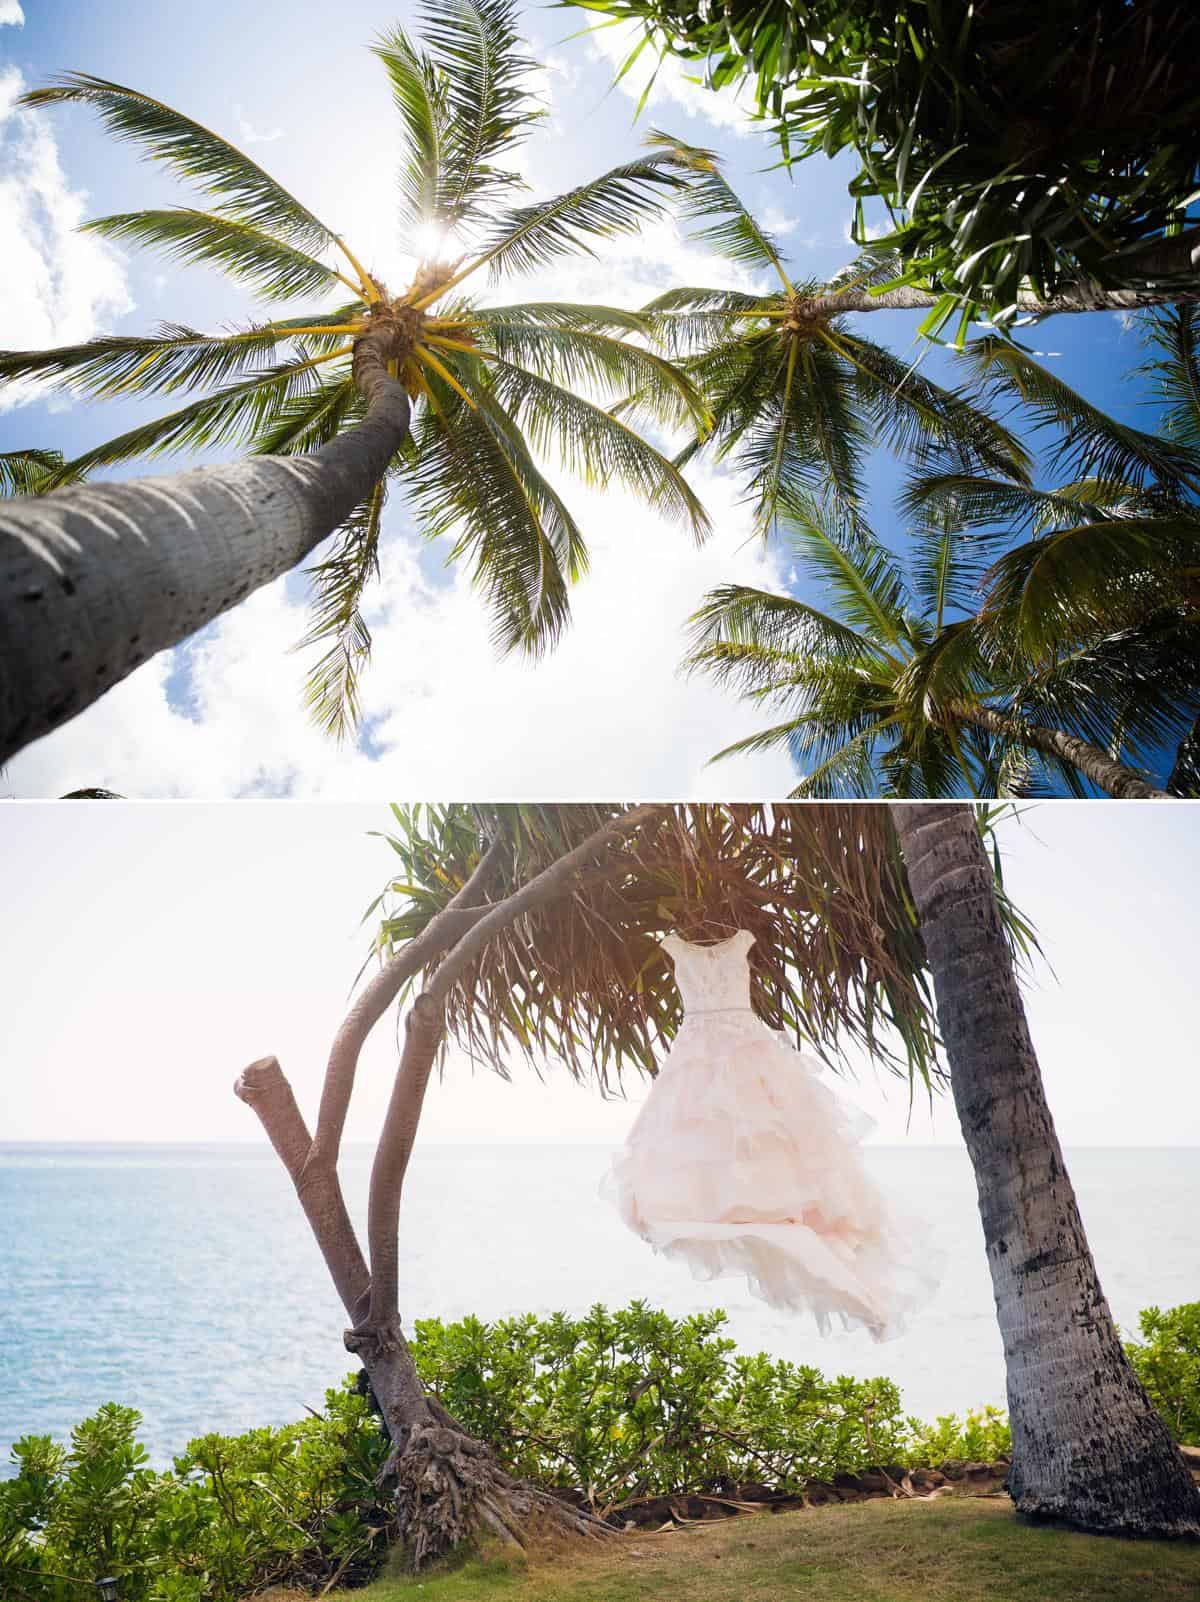 Wedding dress hanging from coconut tree Hawaii Destination wedding photographer www.benandhopeweddings.com.au